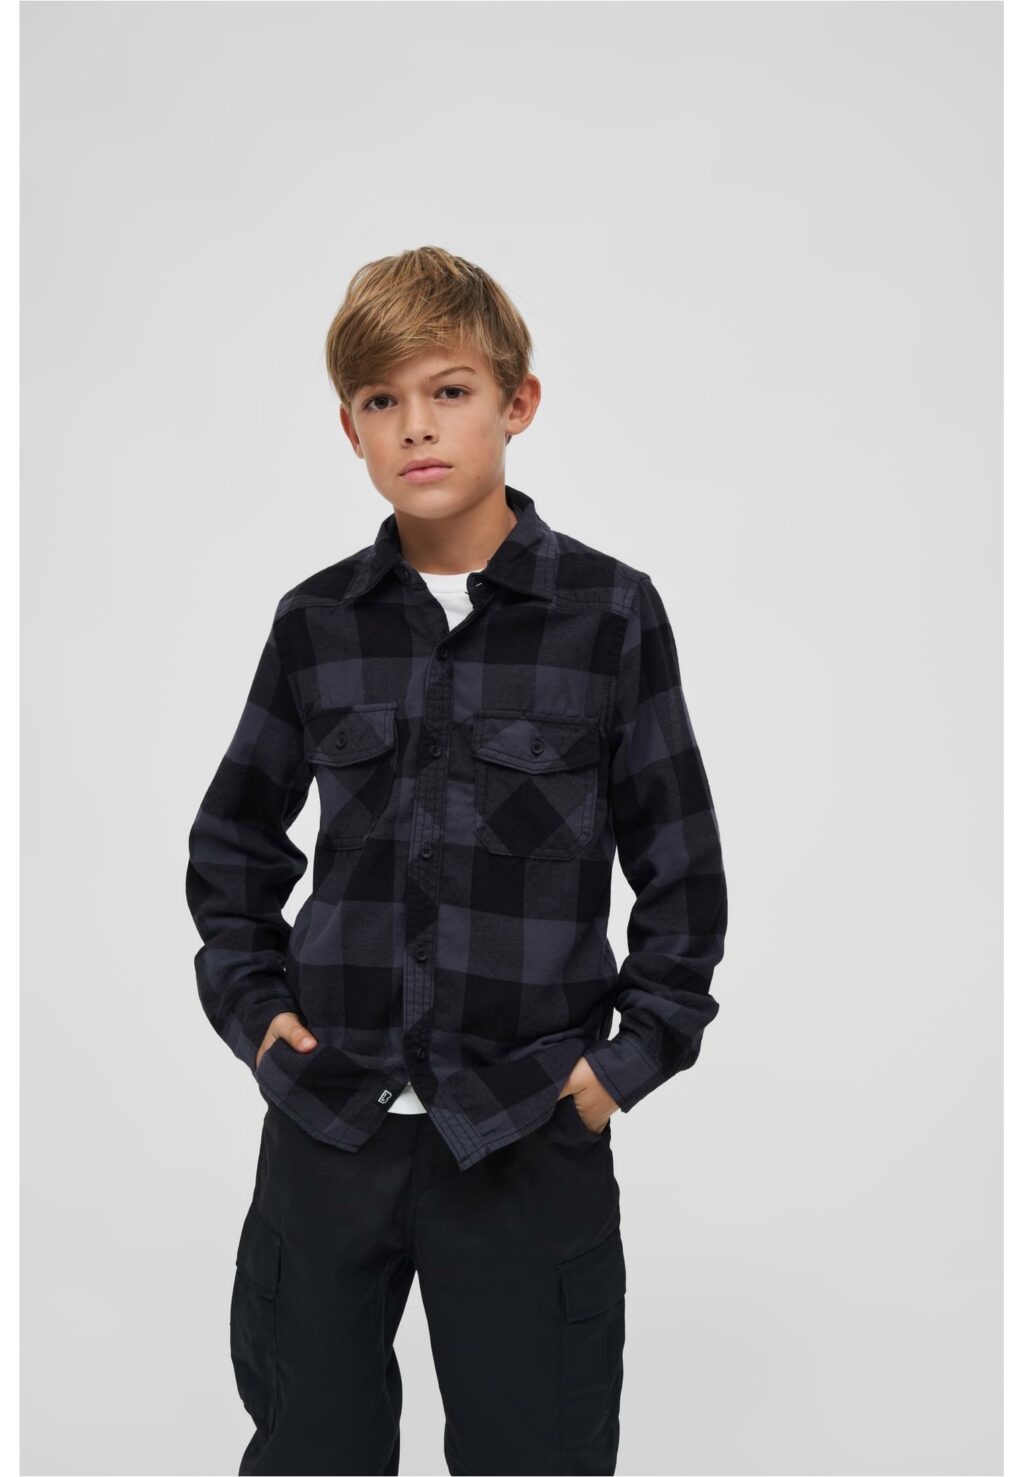 Brandit Checkshirt Kids black/grey BD6016